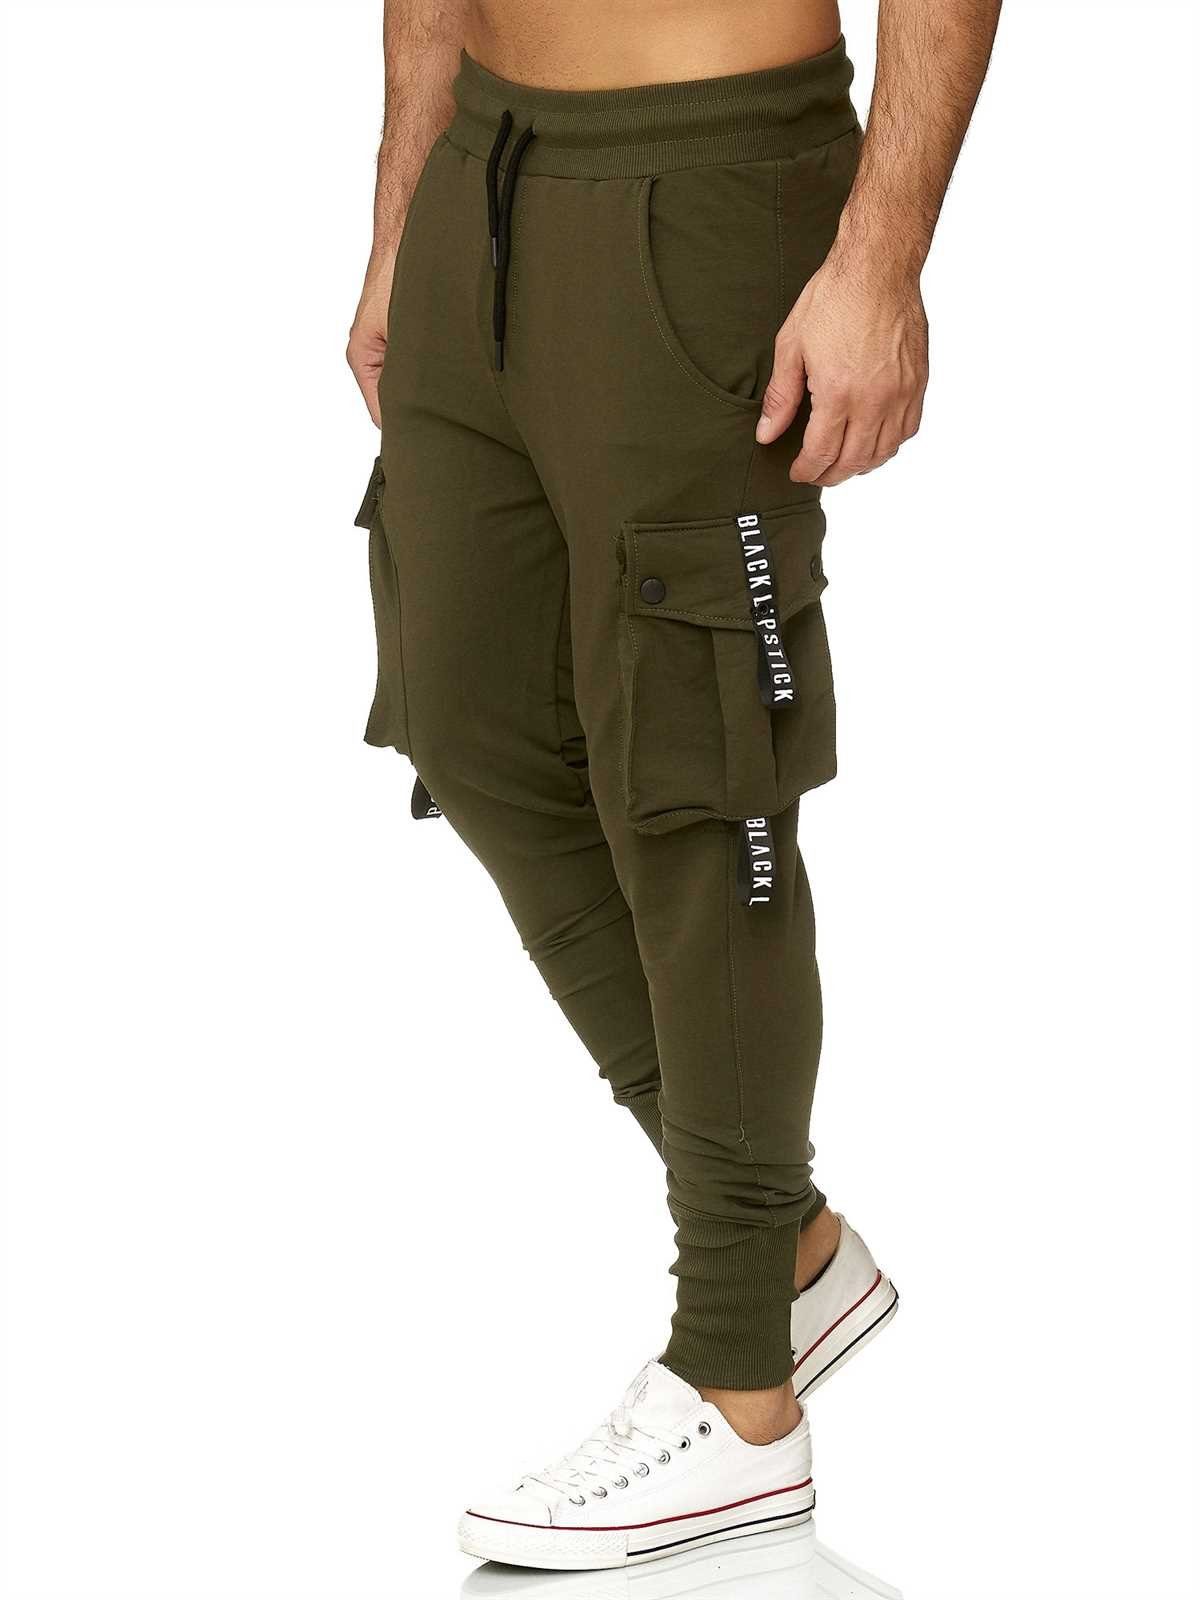 ZOEREA Herren Hosen Jogginghose Slim Fit Casual Chino Cargo Jogger Stretch Sporthose mit Taschen Streetwear Freizeithose Etikett S~3XL